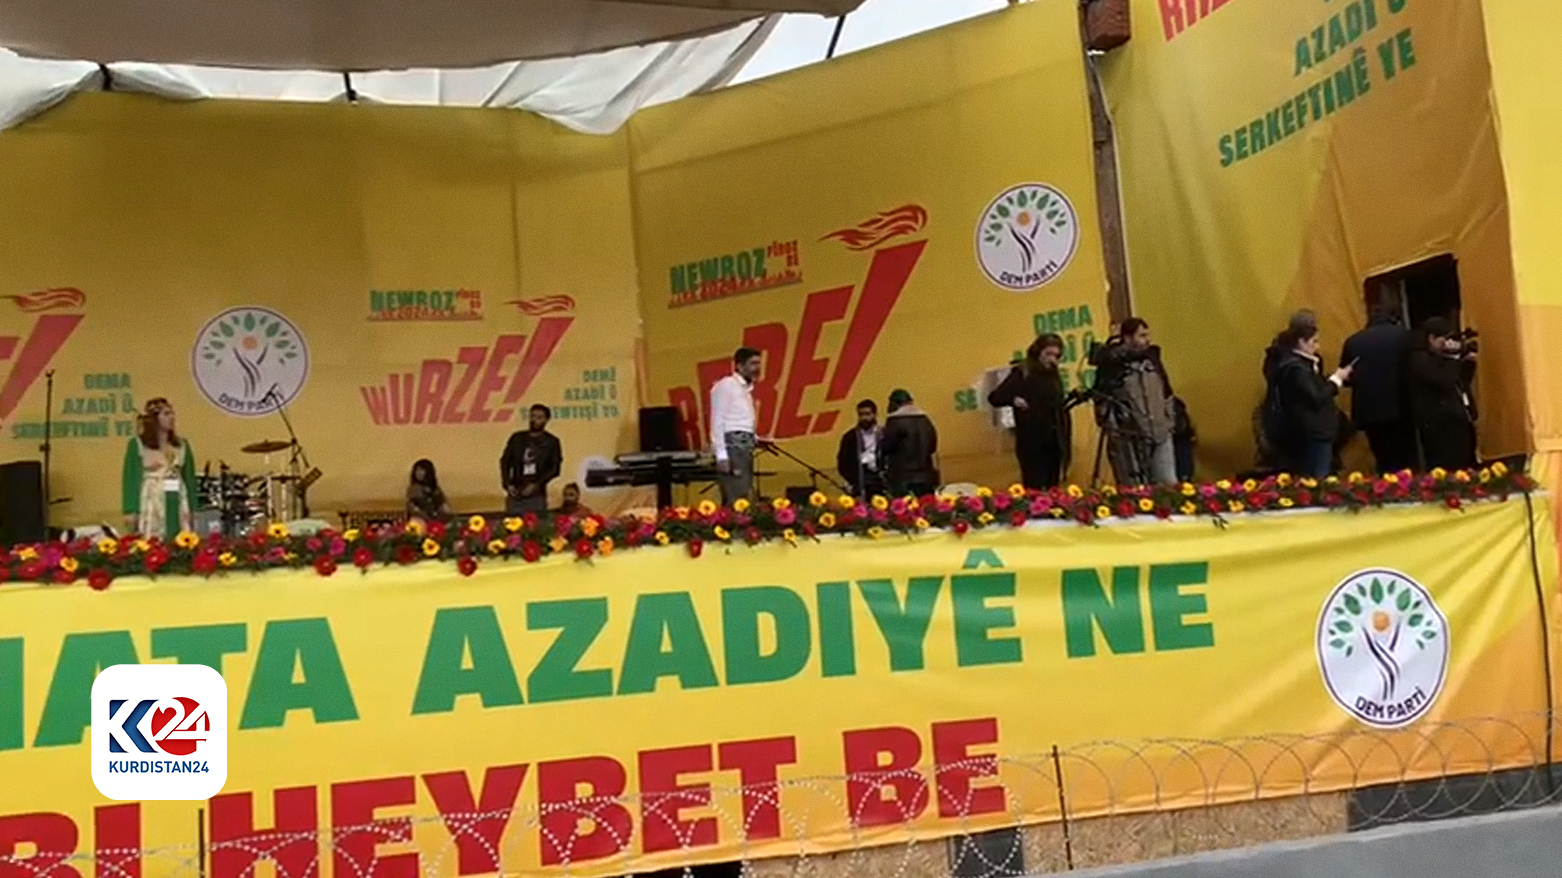 Diyarbakir celebrates Newroz with Kurds waving Kurdistan flag